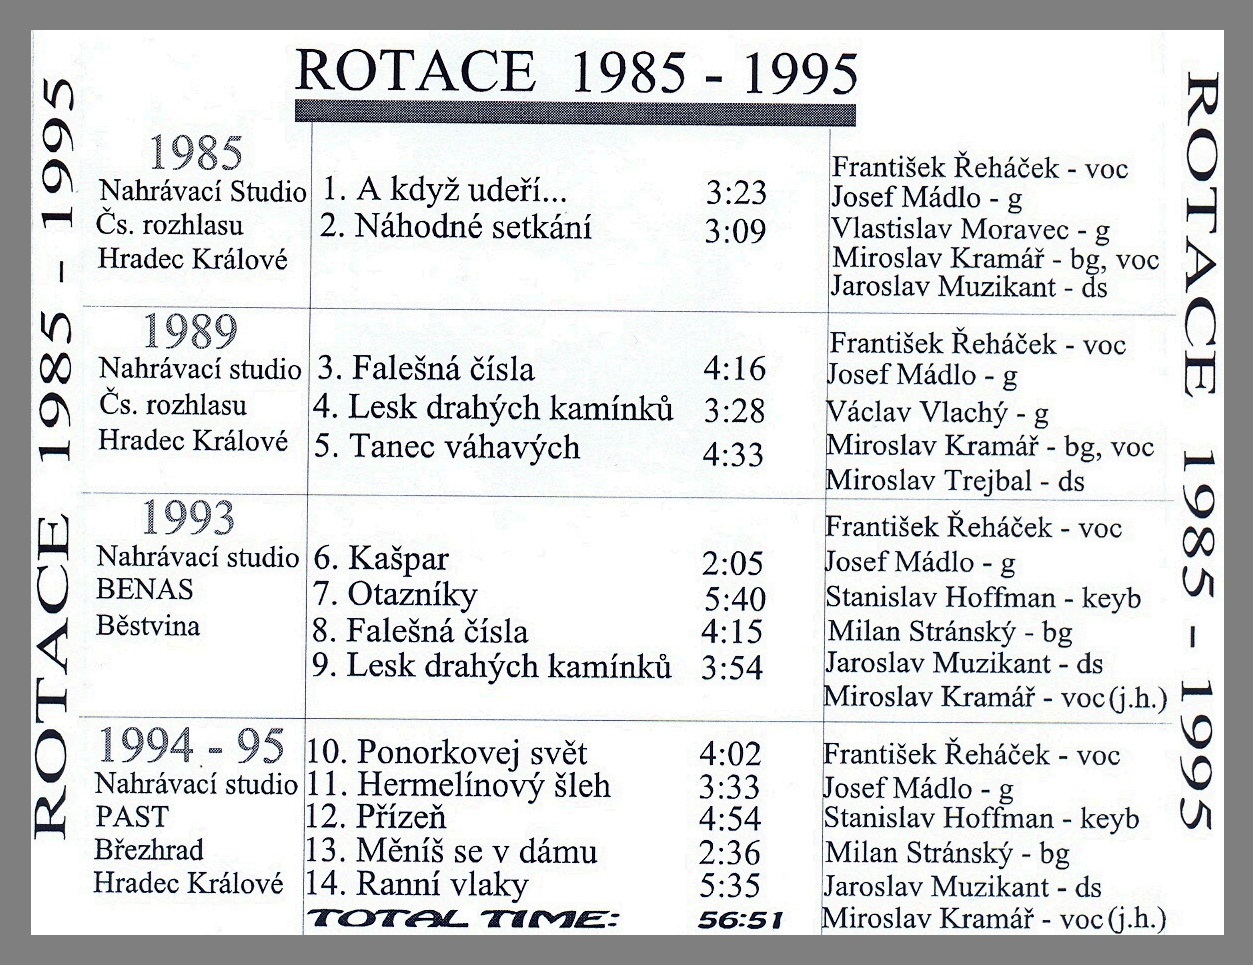 CD Rotace 1985 - 1995 (back)